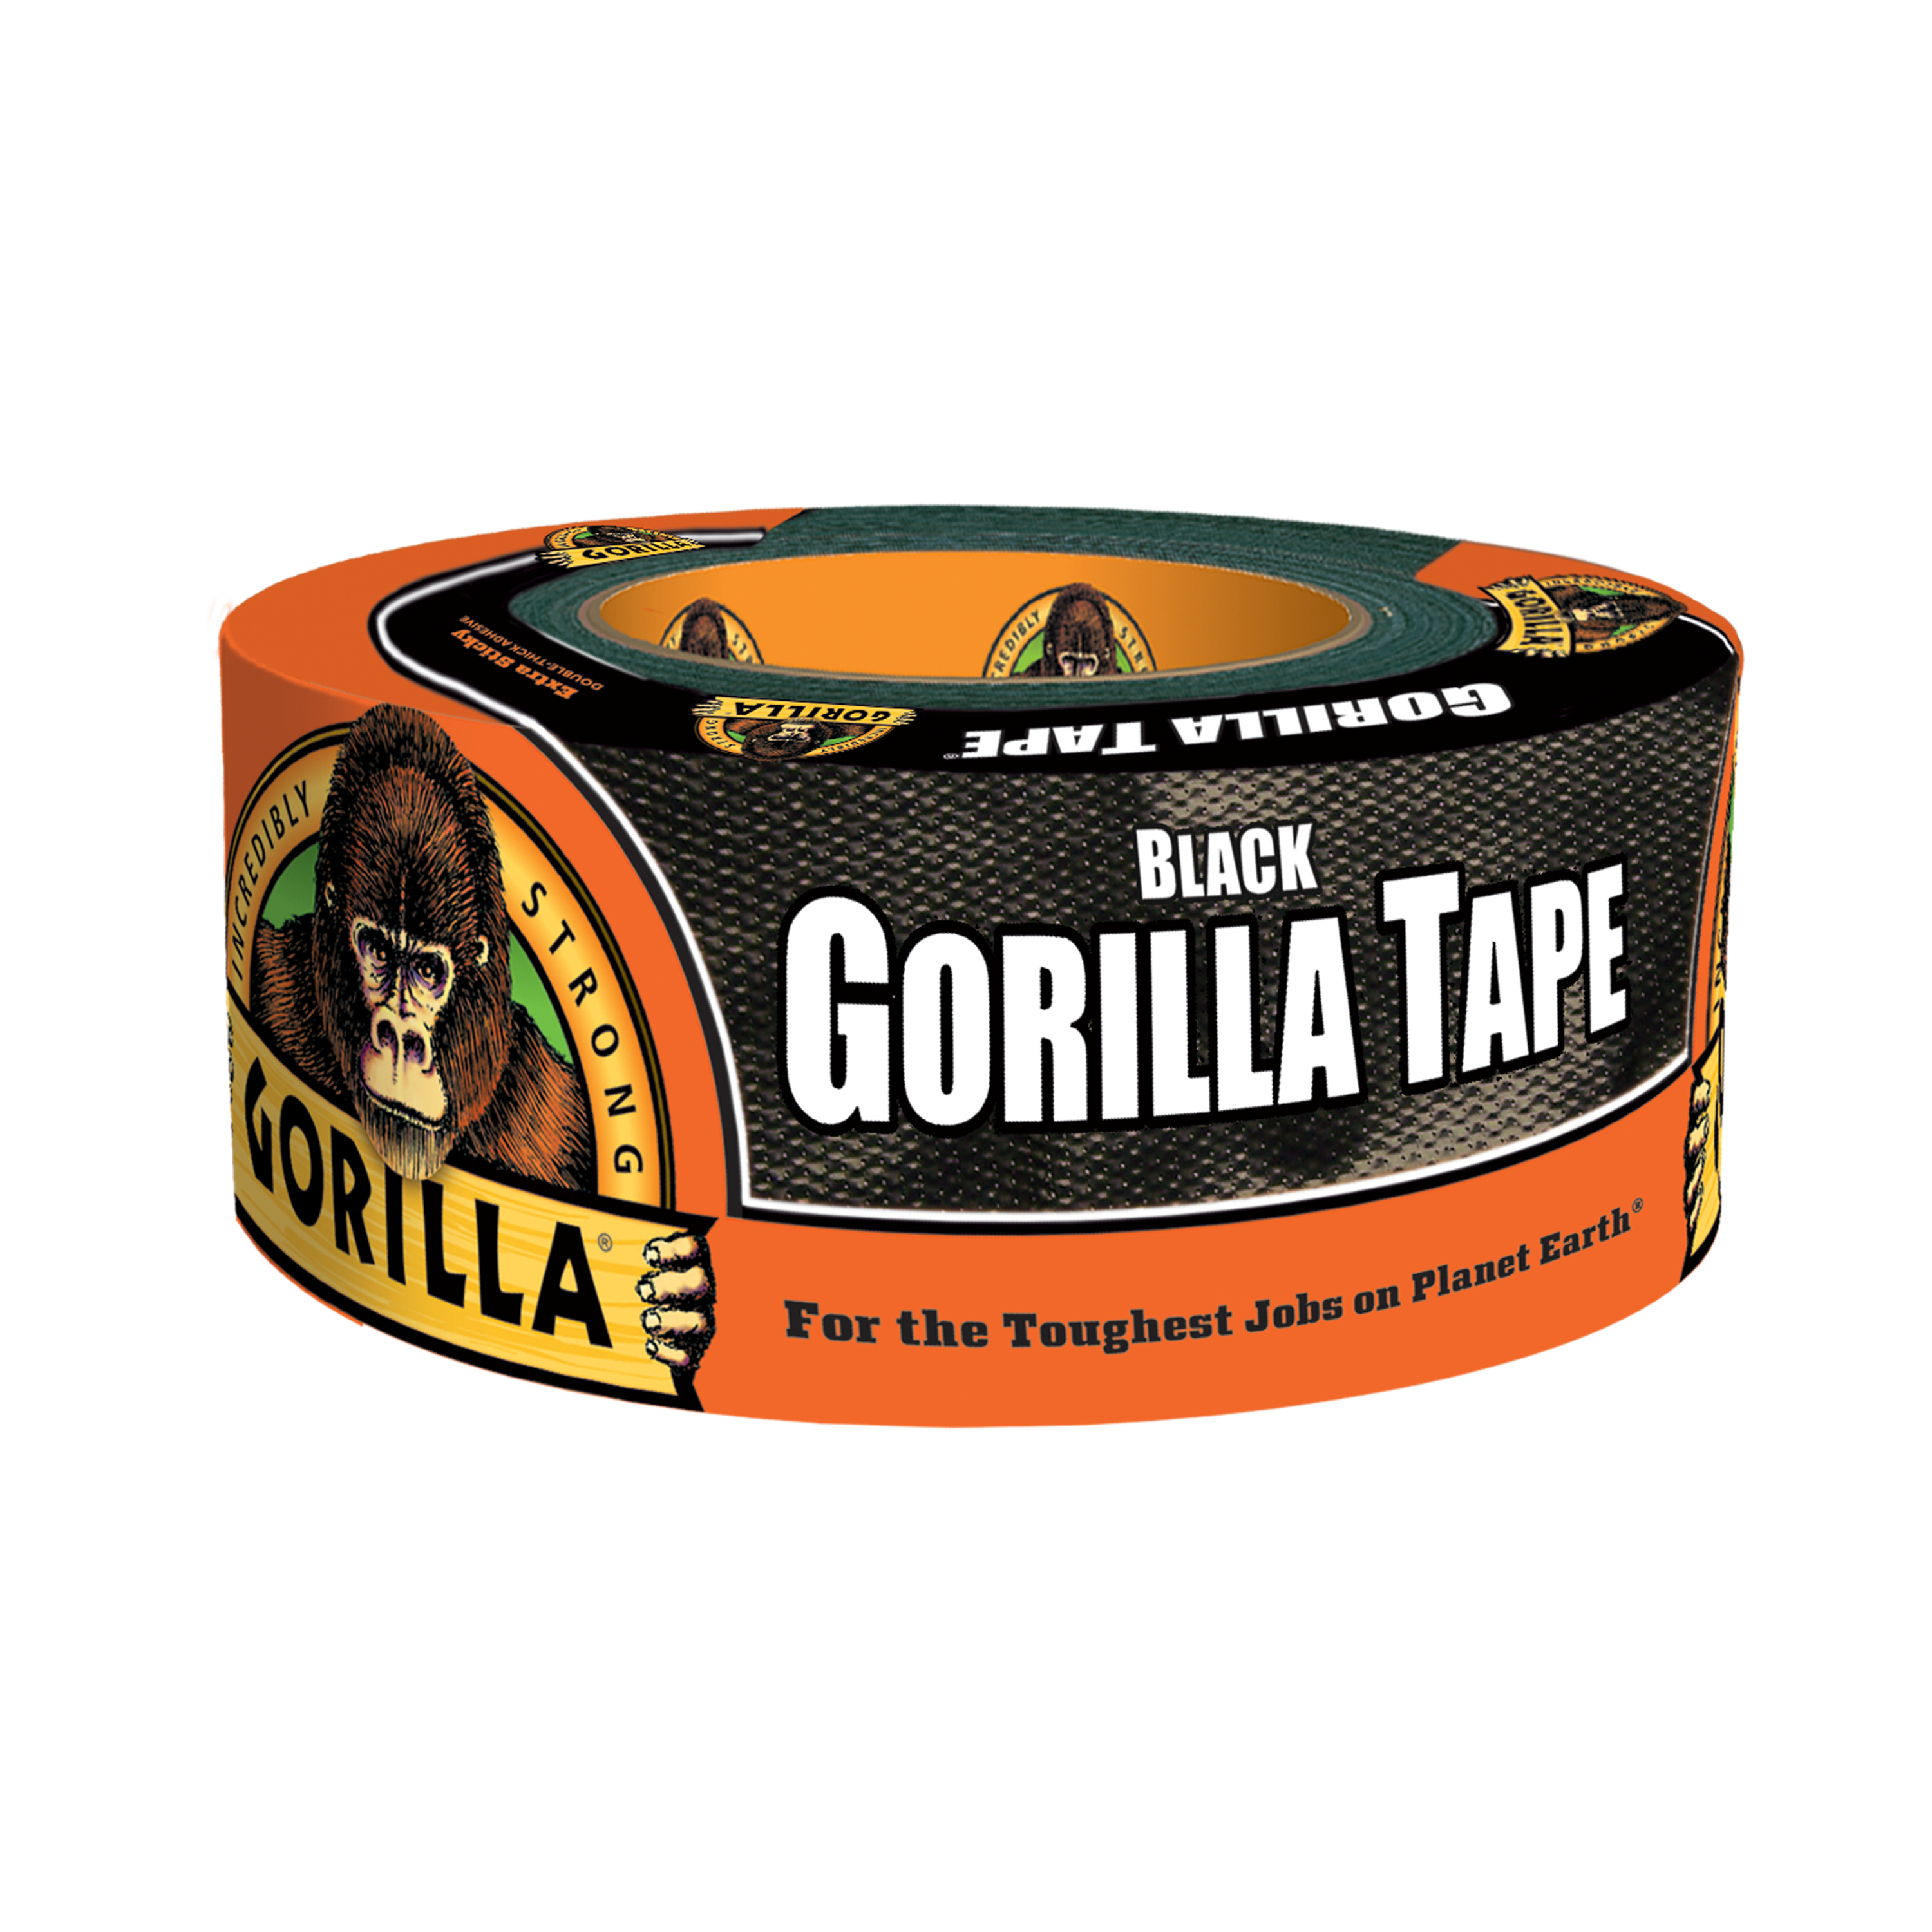 Gorilla Black Tape, 1.88" x 12 yd Roll - image 1 of 8